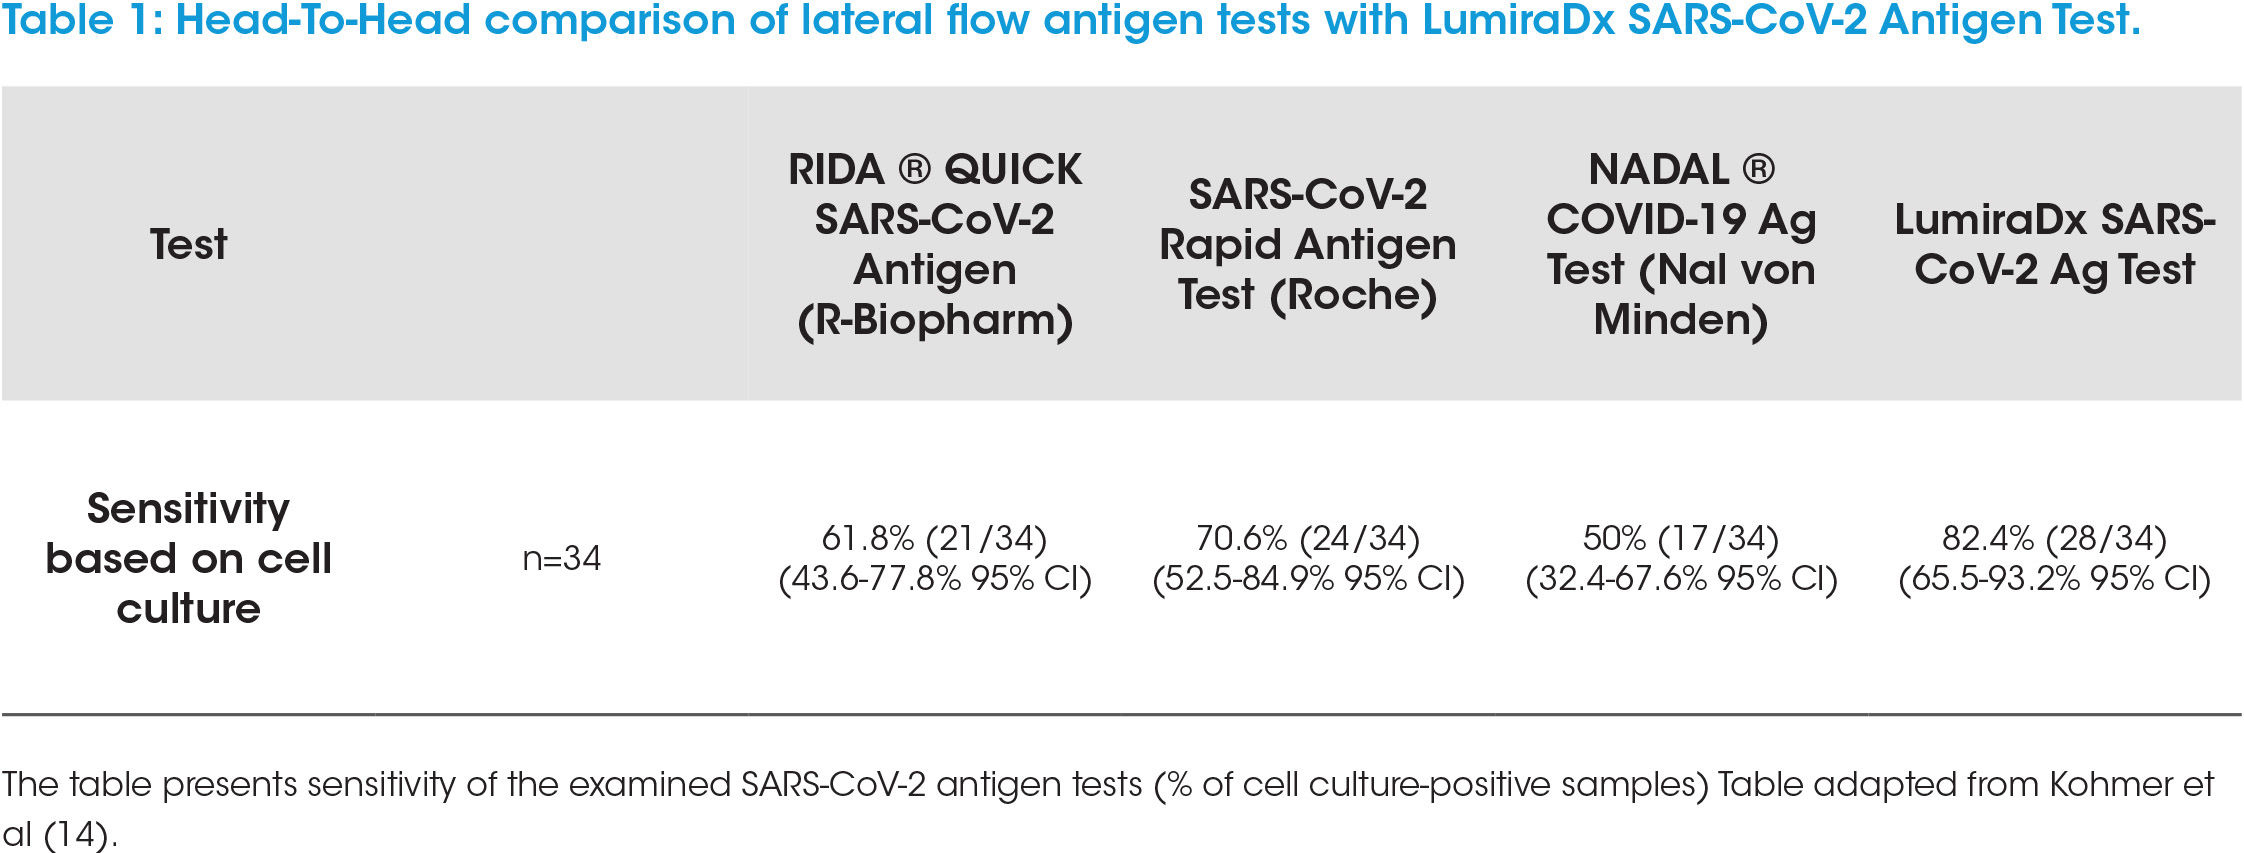 Head-To-Head comparison of lateral flow antigen tests with LumiraDx SARS-CoV-2 Antigen Test